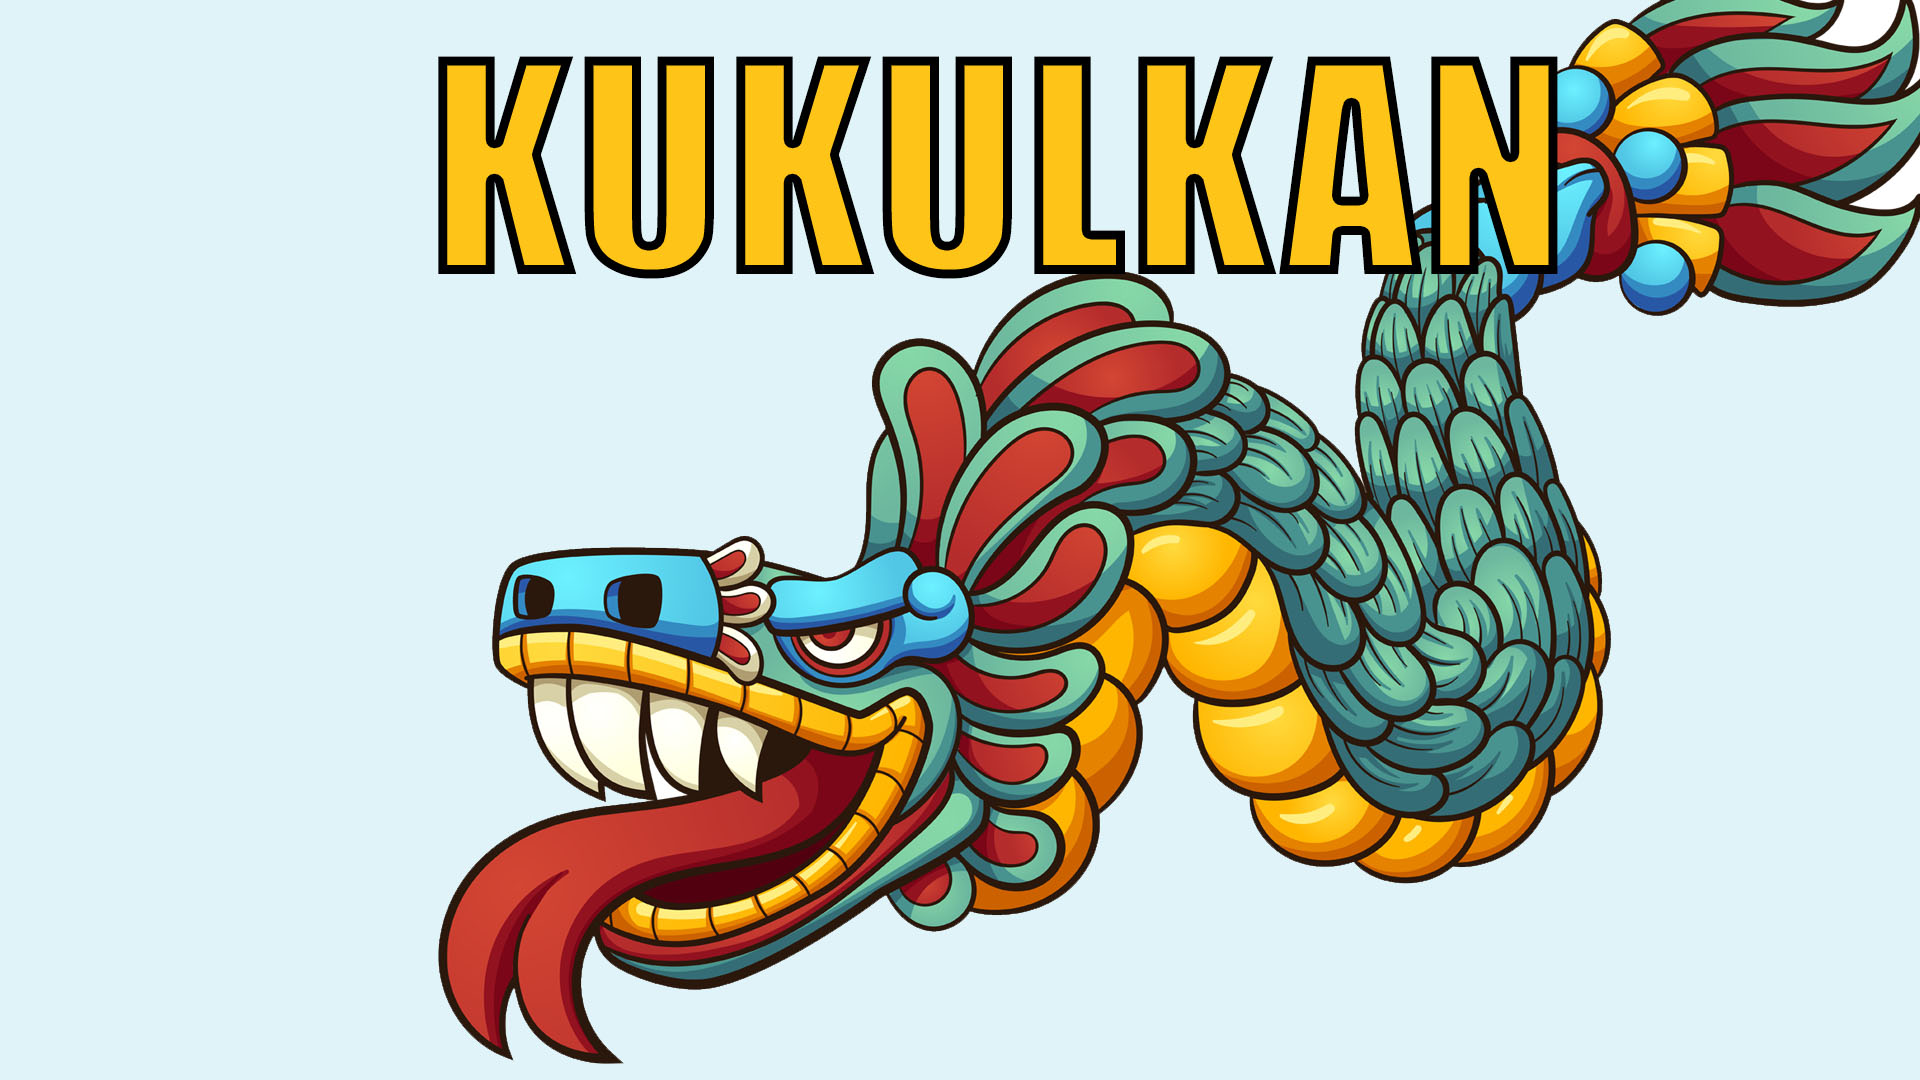 Kukulkan Feathered Serpent God & the Lost City of Atlantis